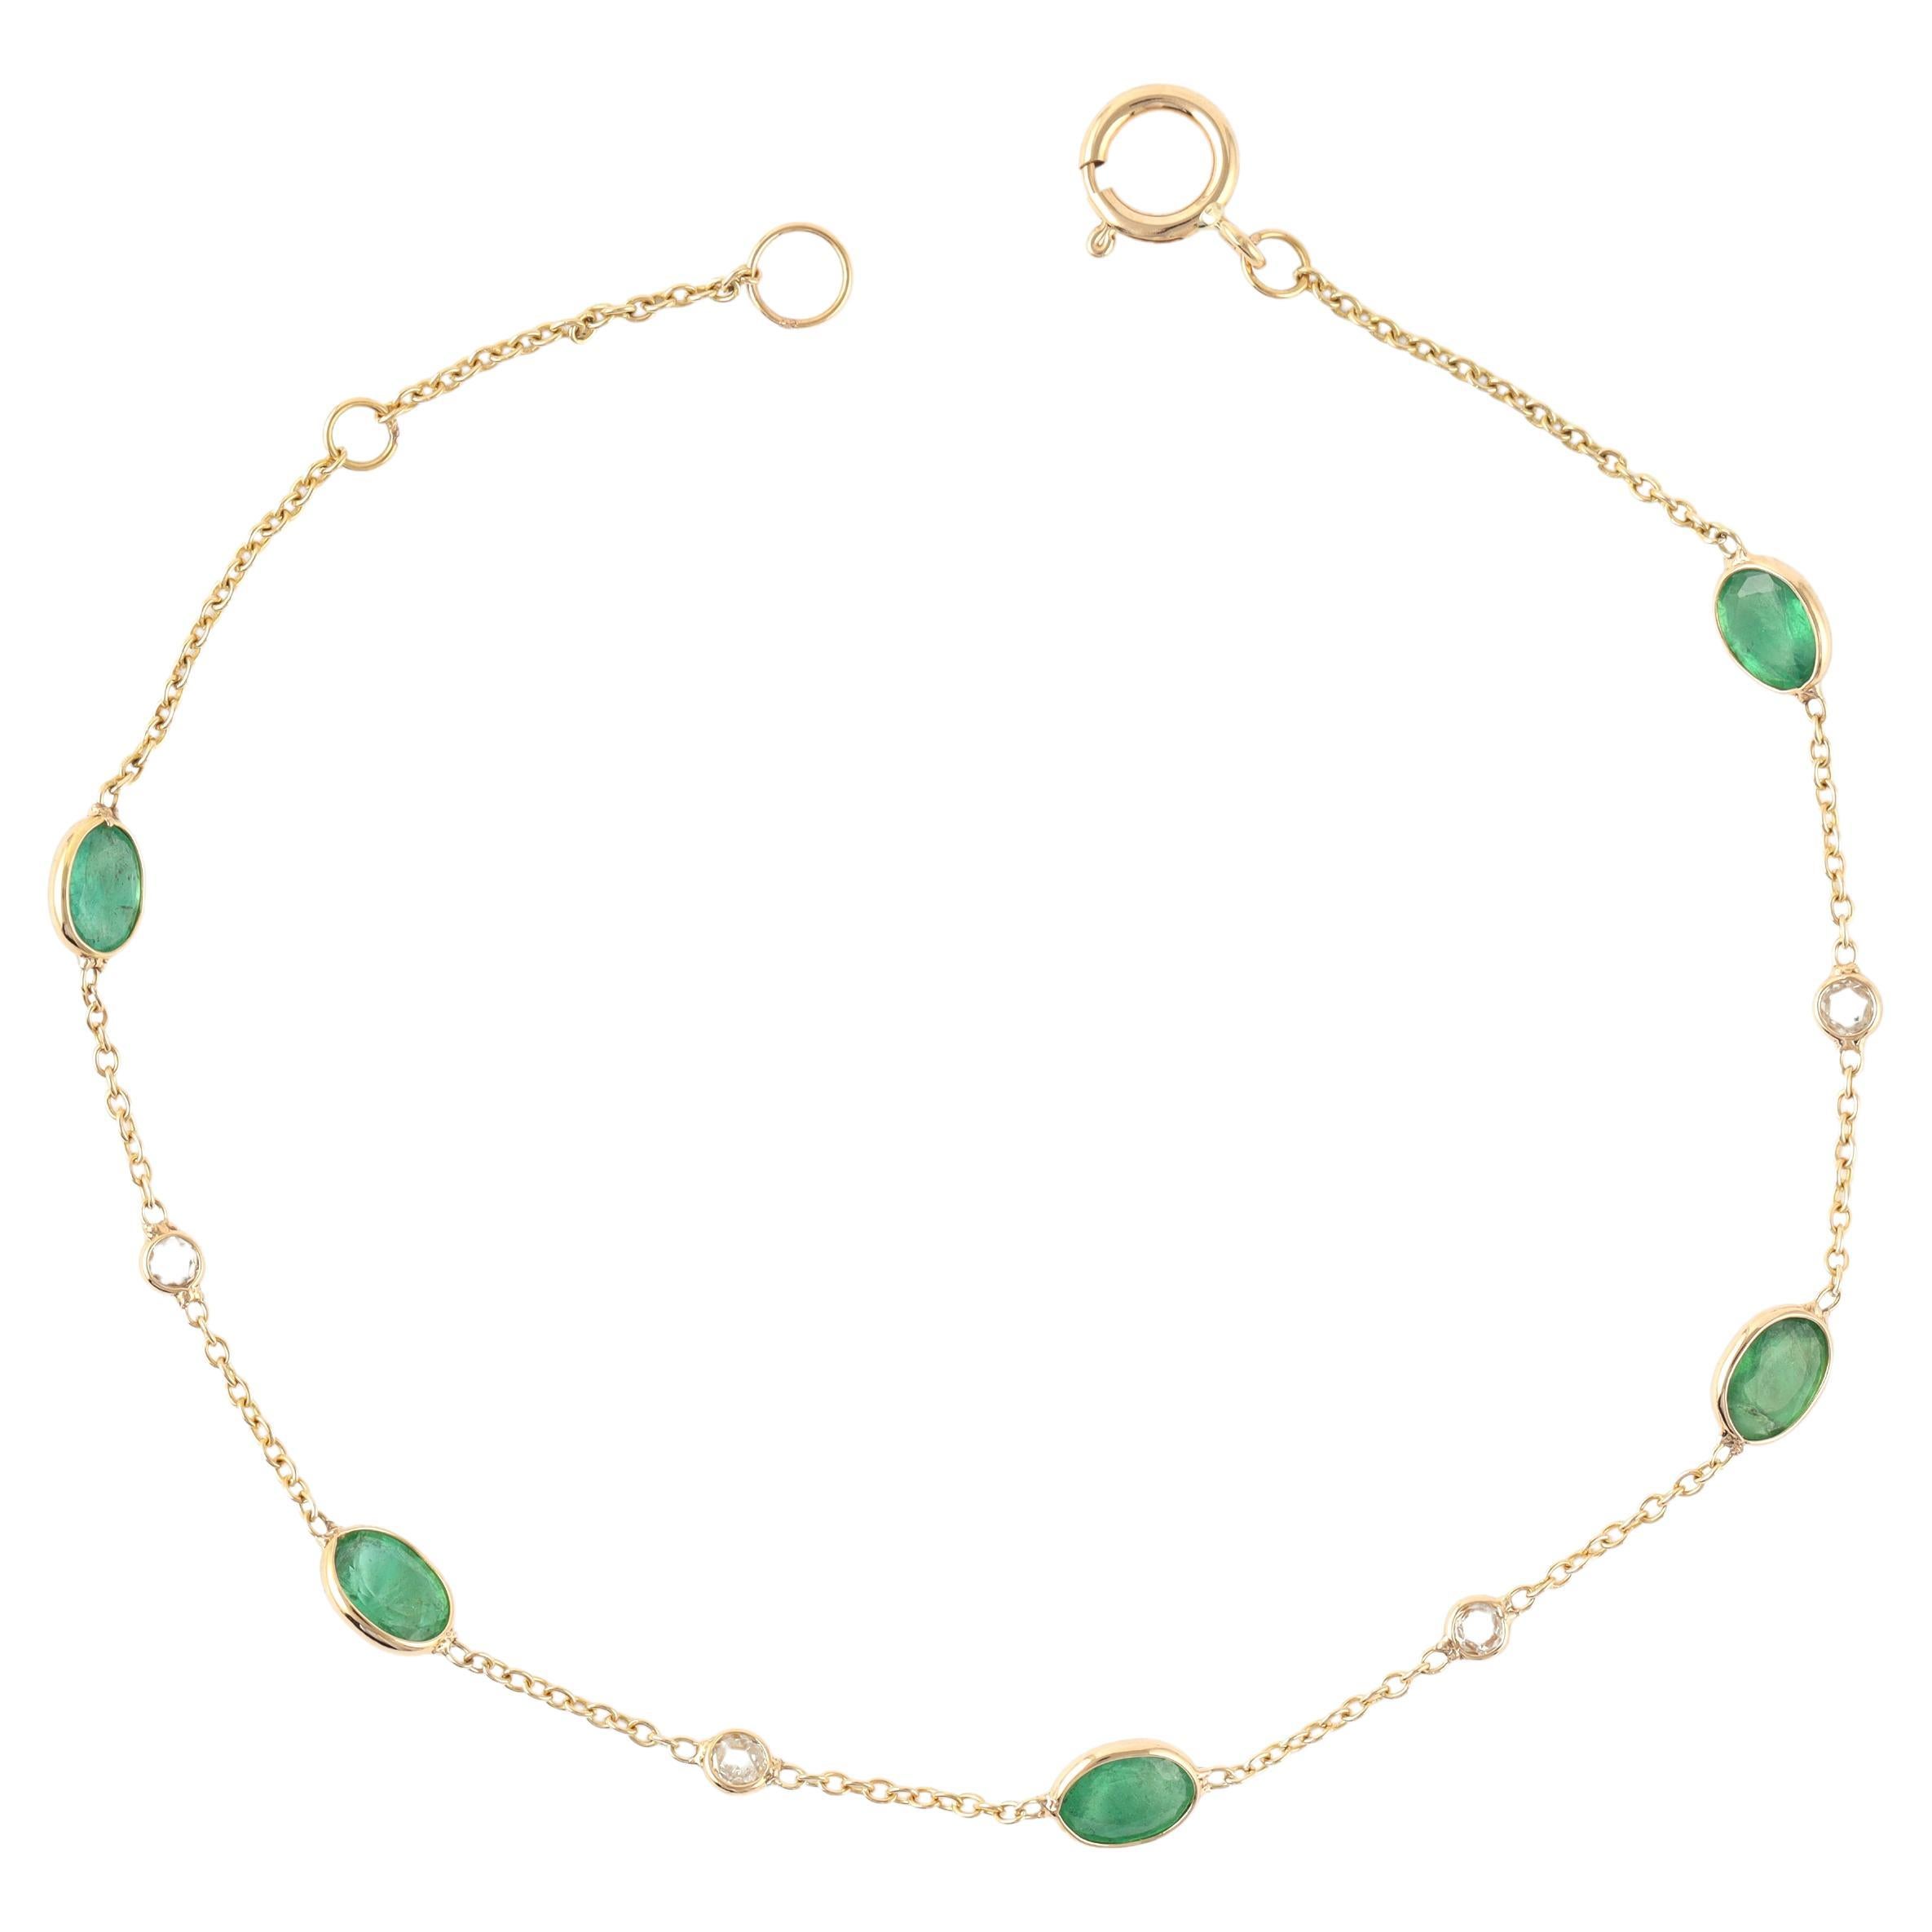 1.55 Carat Fine Emerald & Diamond Chain Tennis Bracelet in 18k Gold